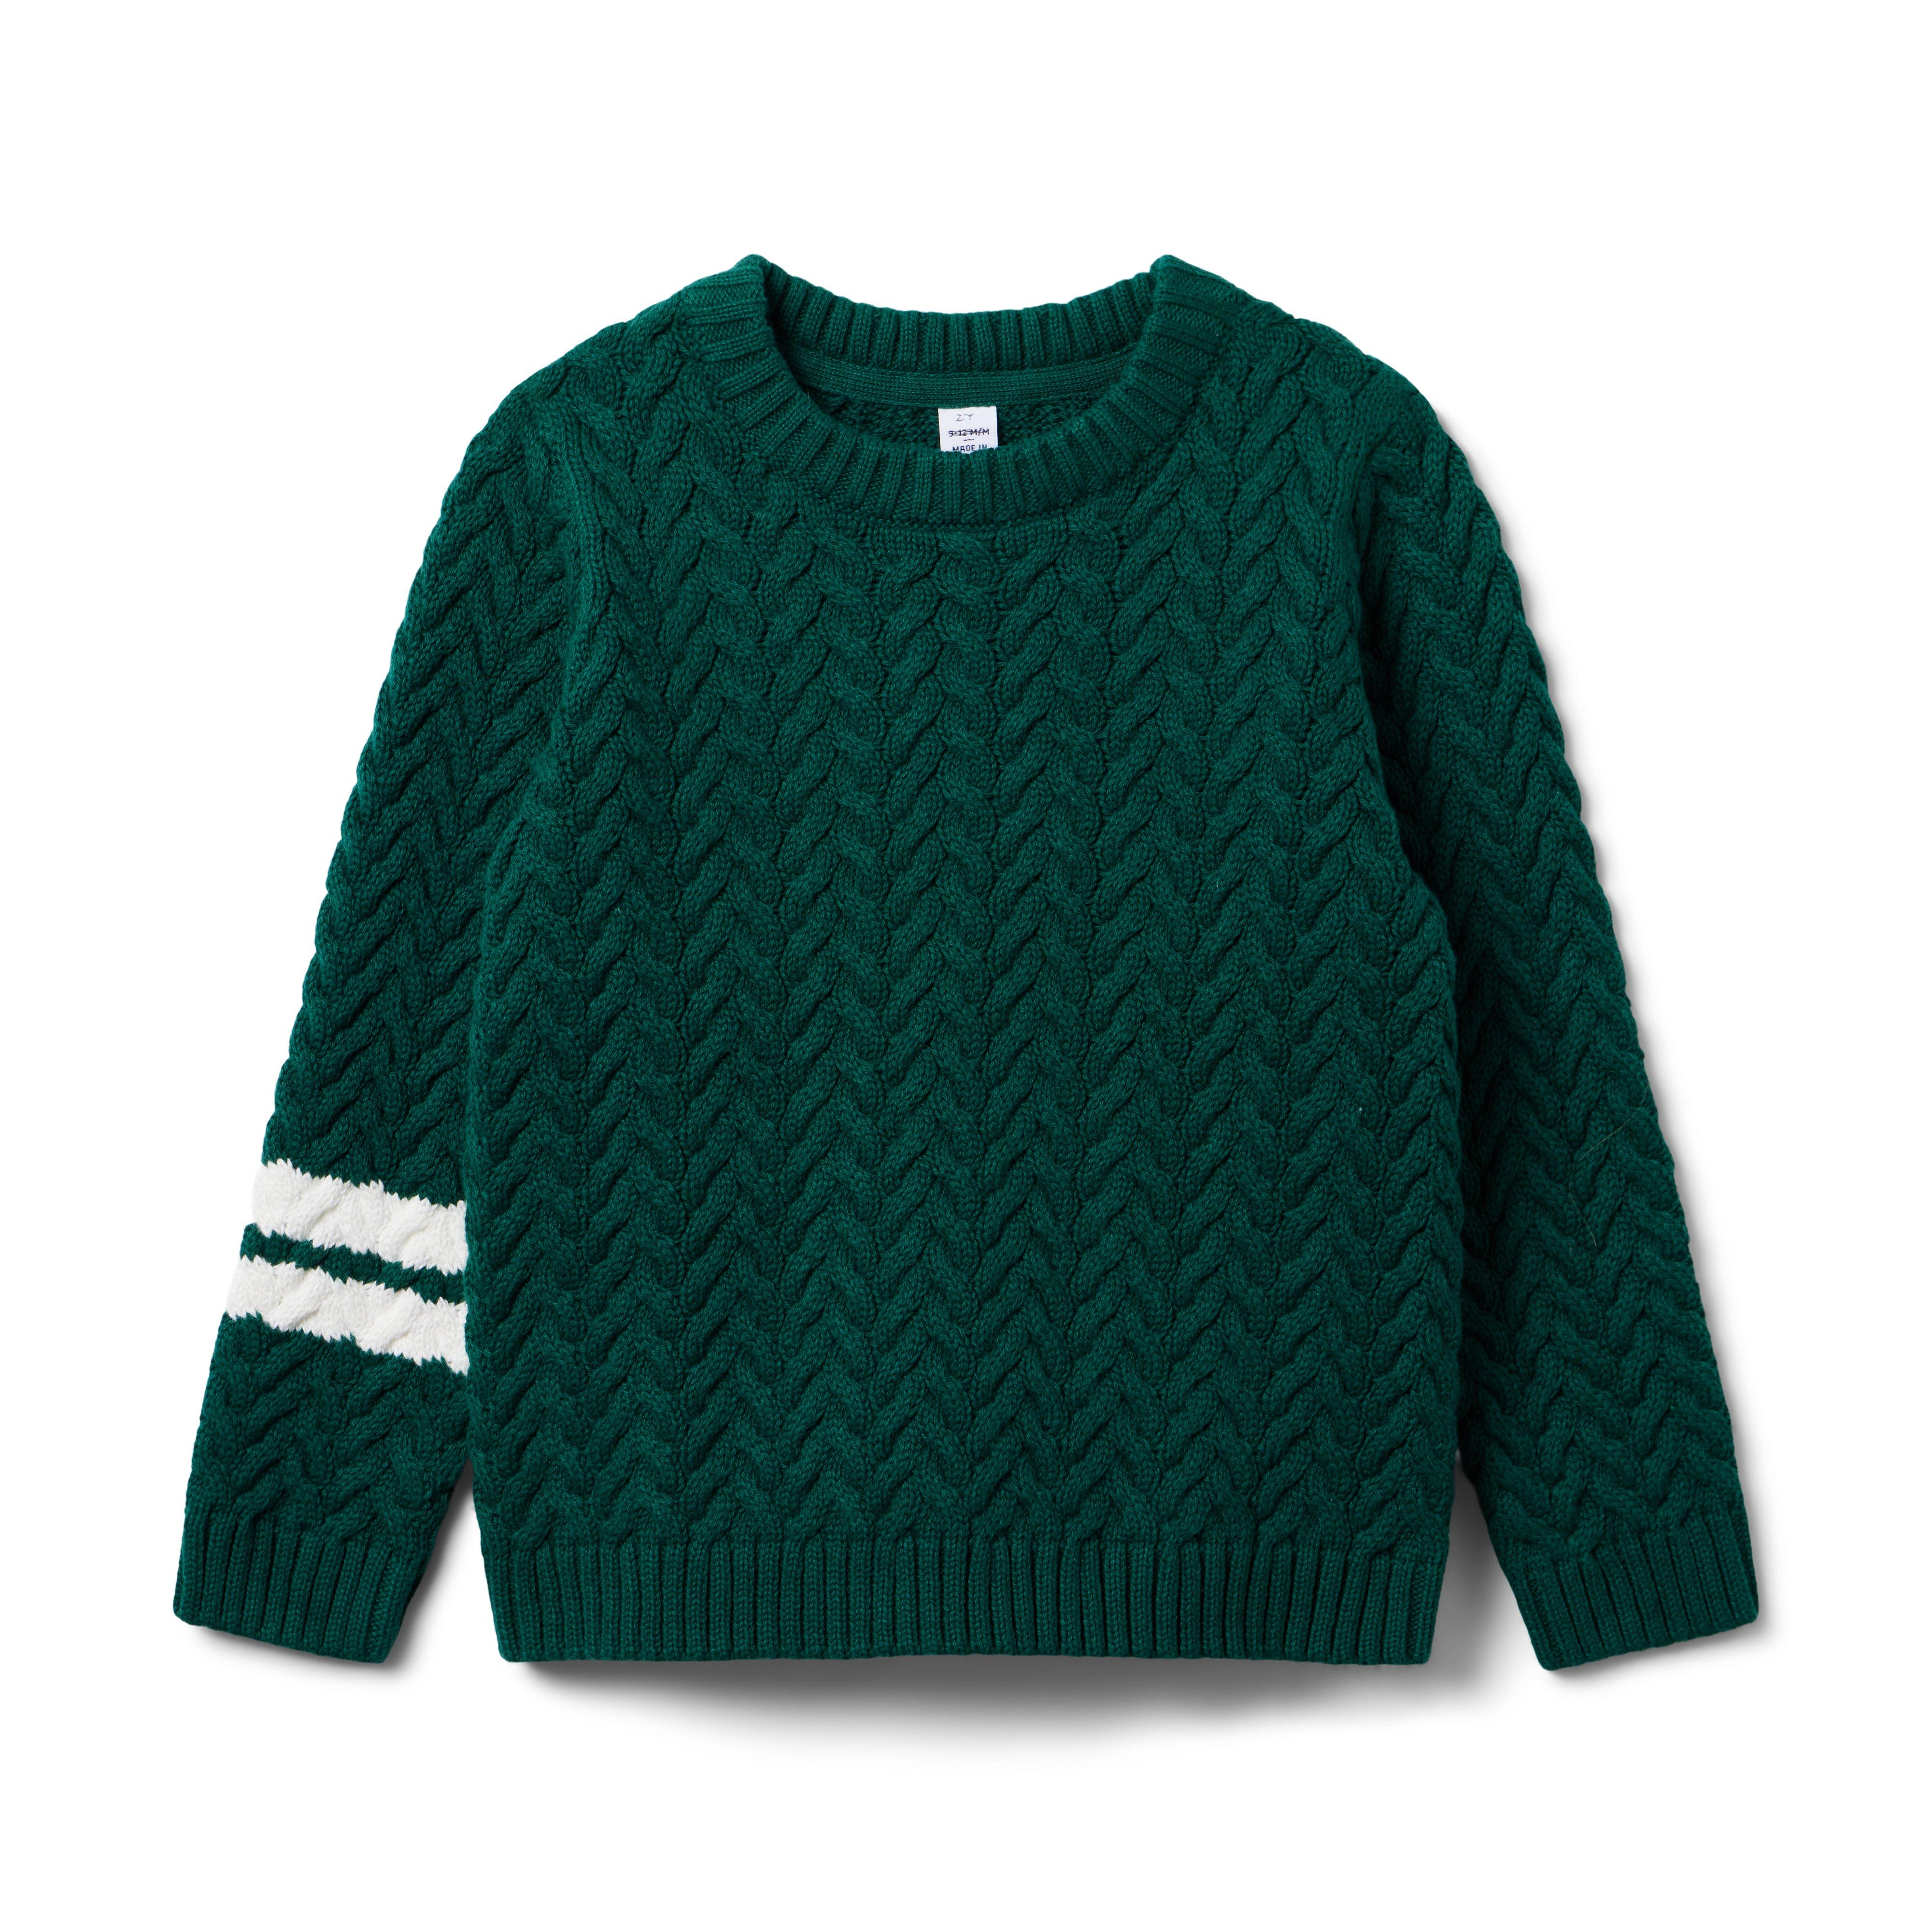 The Herringbone Sweater